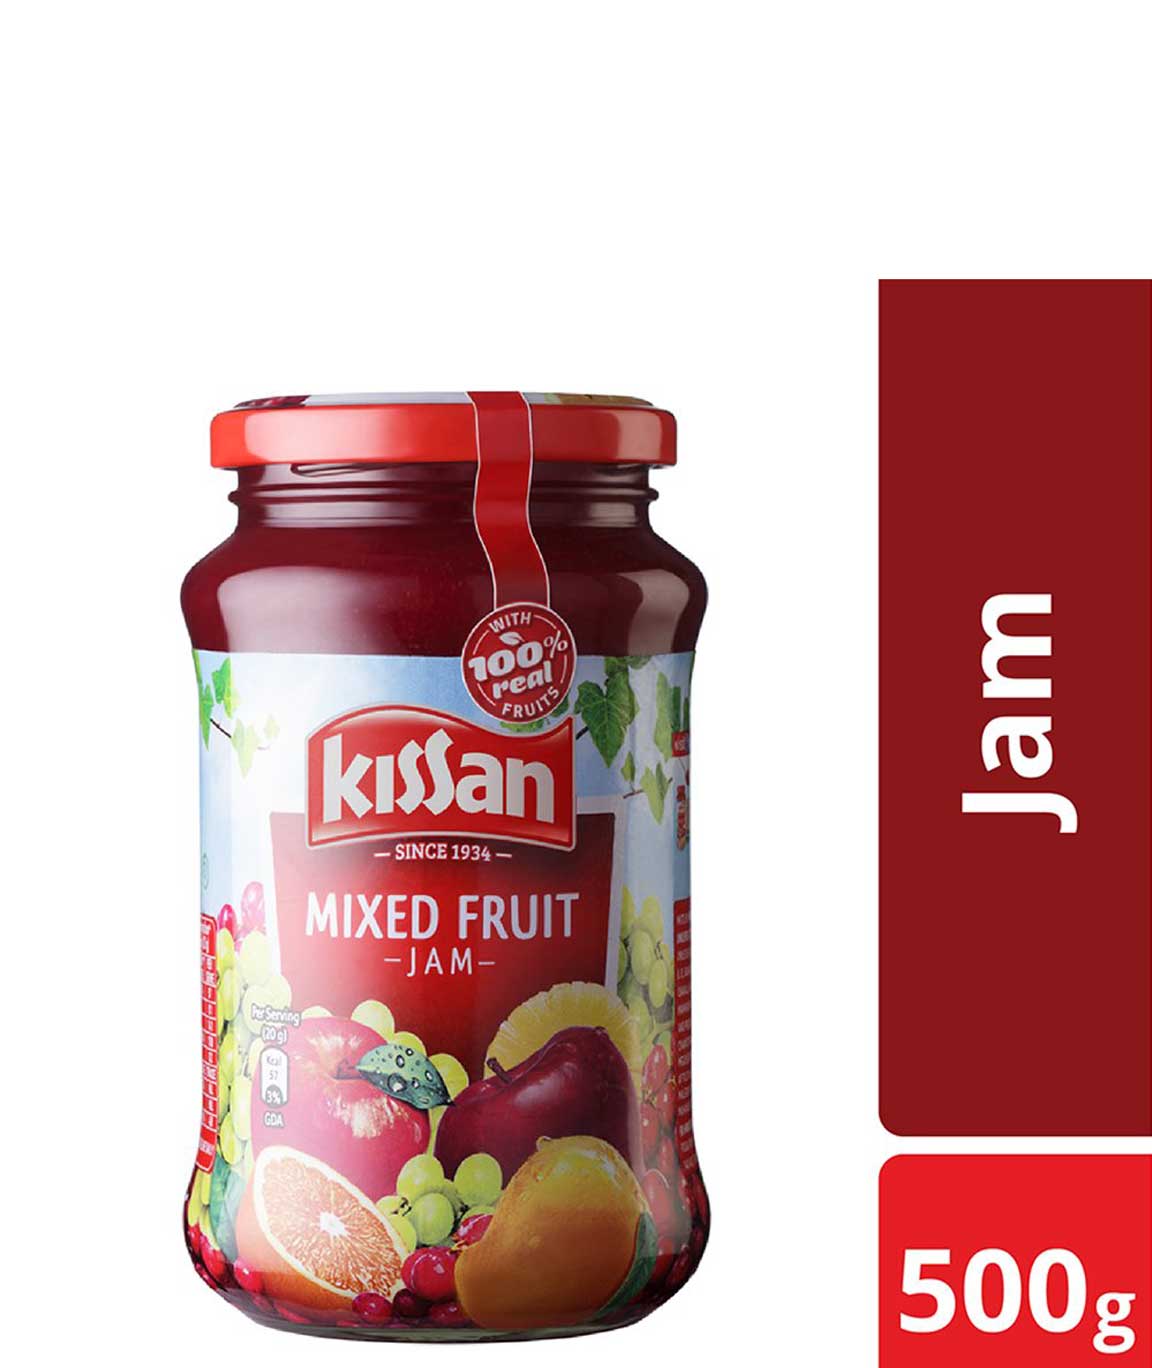 https://www.manthanonline.in/uploadImages/productimage/kissan-mix-fruit-jam-500g-jar-jam1.jpg